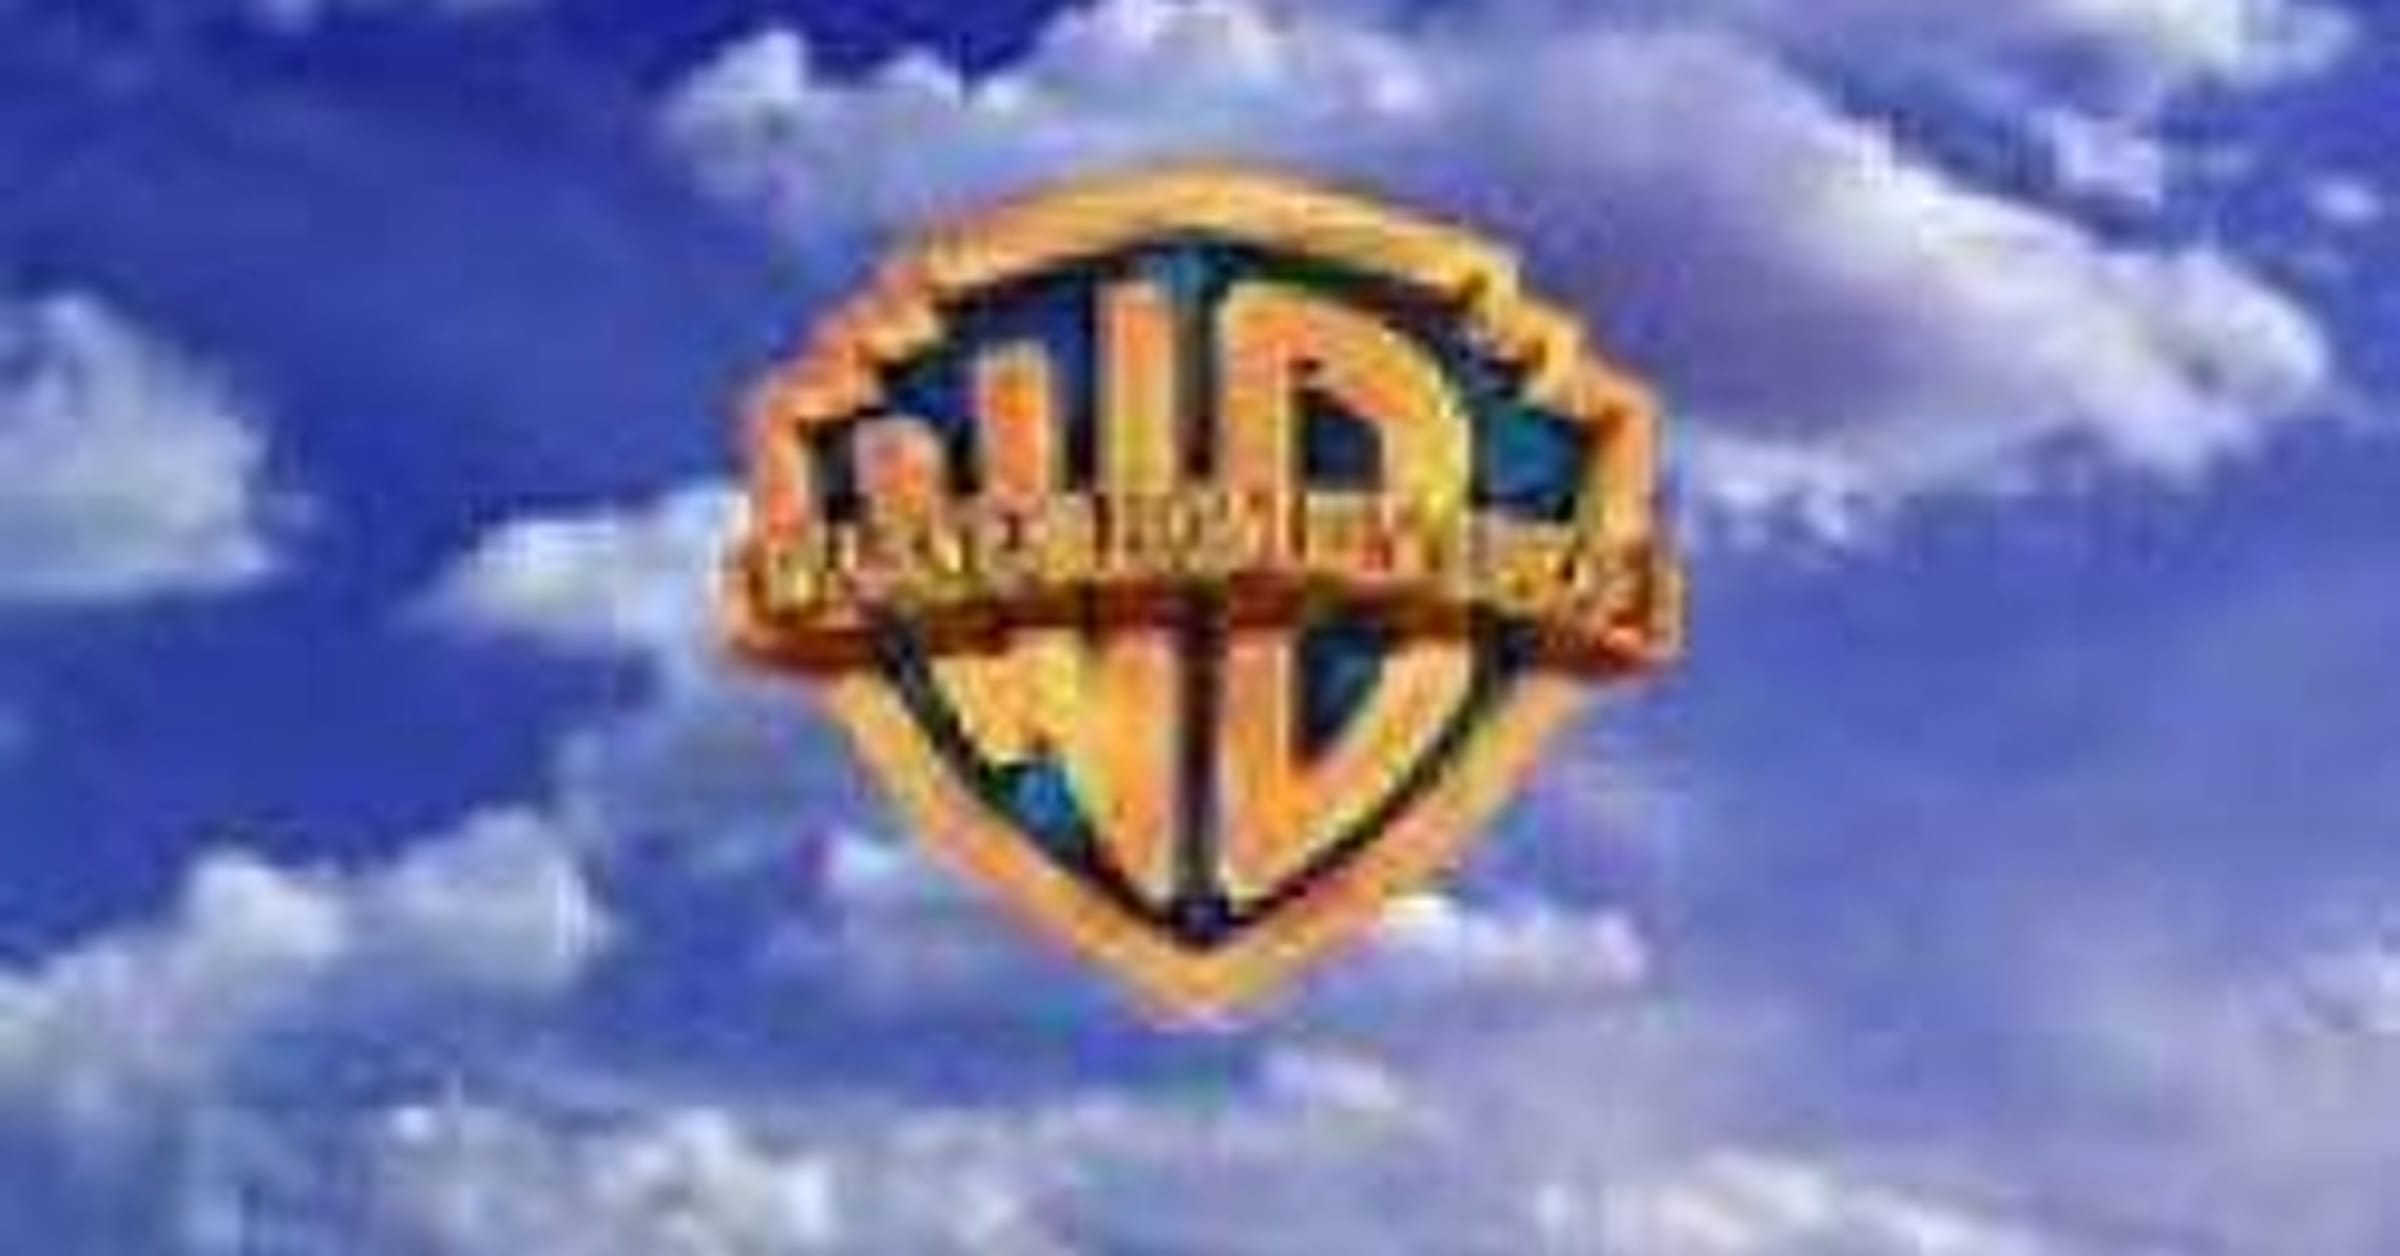 movie studio logos list